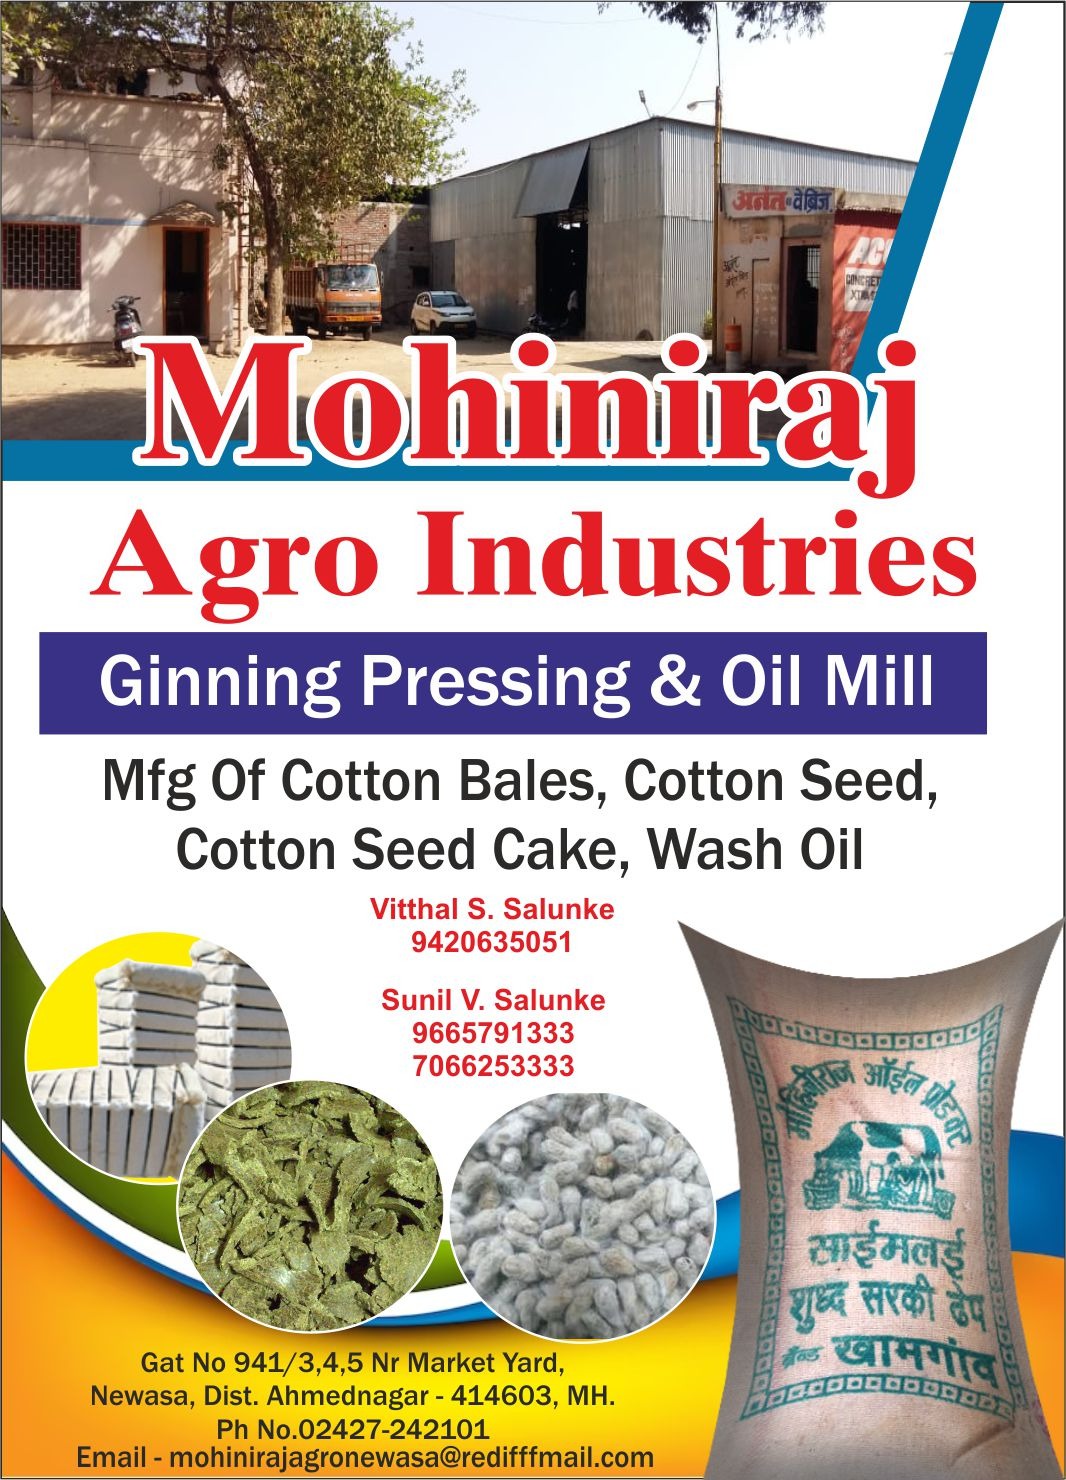 Mohiniraj Agro Industries